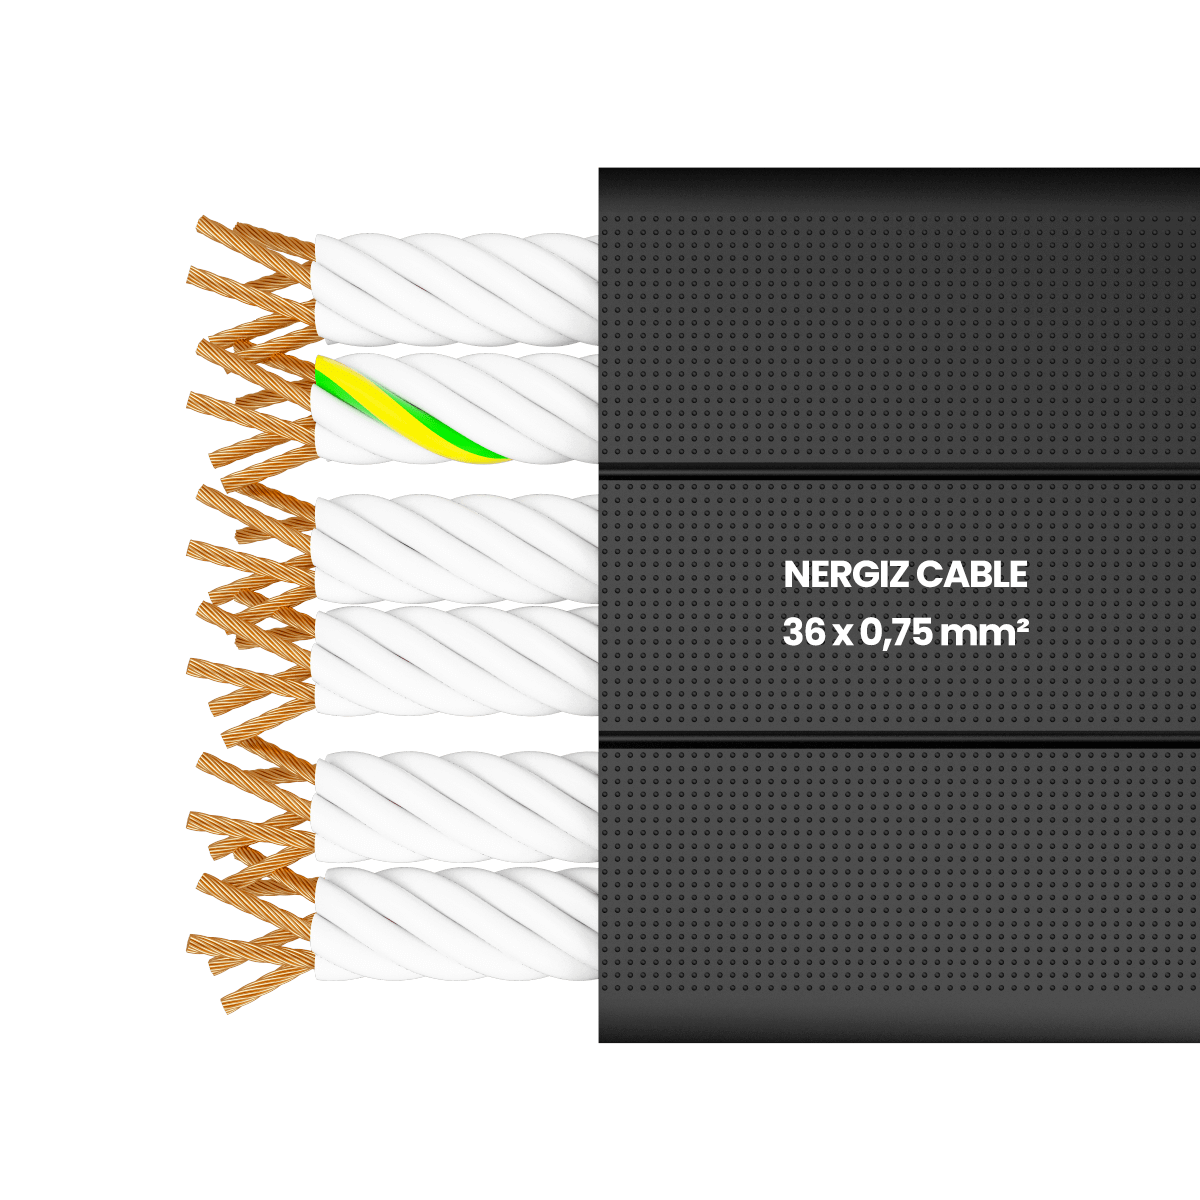 H05VVH6-F 36x0.75 mm² Flat Flexible Cable